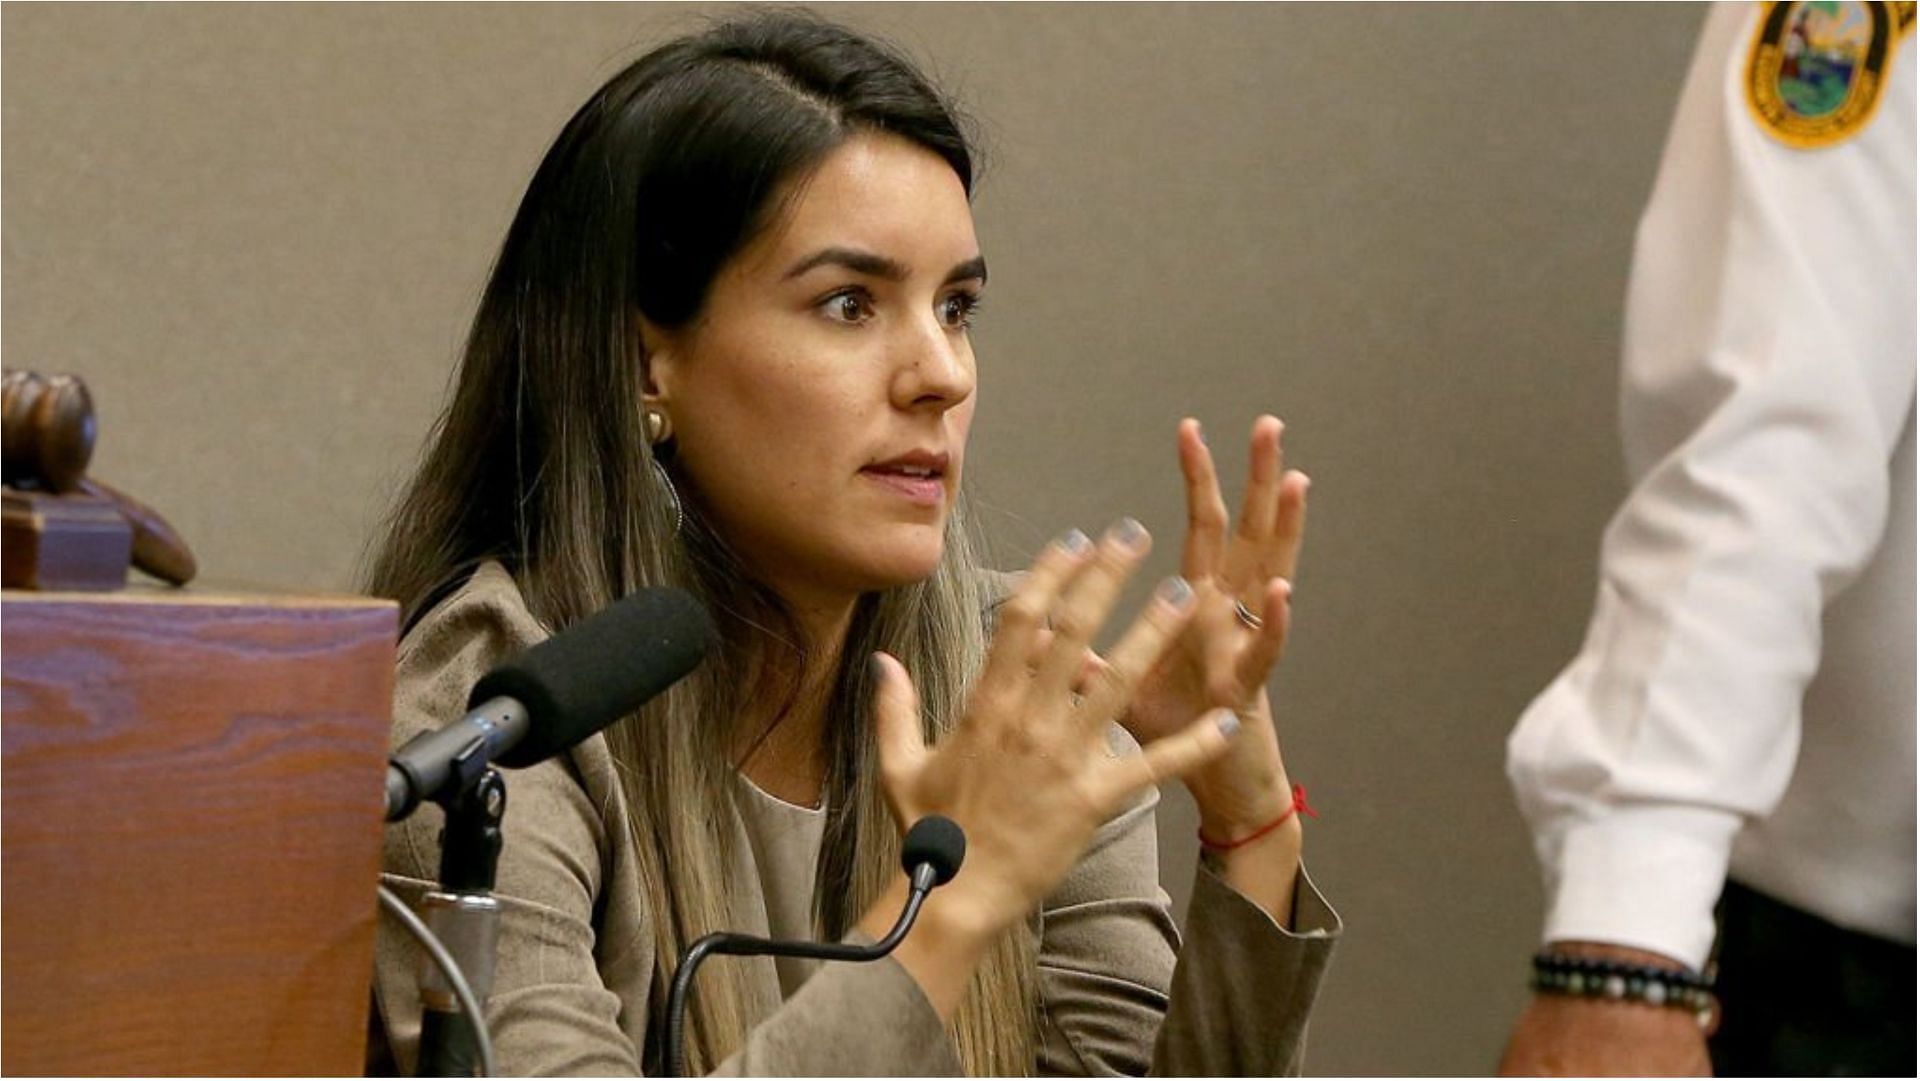 Ana Araujo is a famous social media influencer (Image via Pedro Portal/Getty Images)